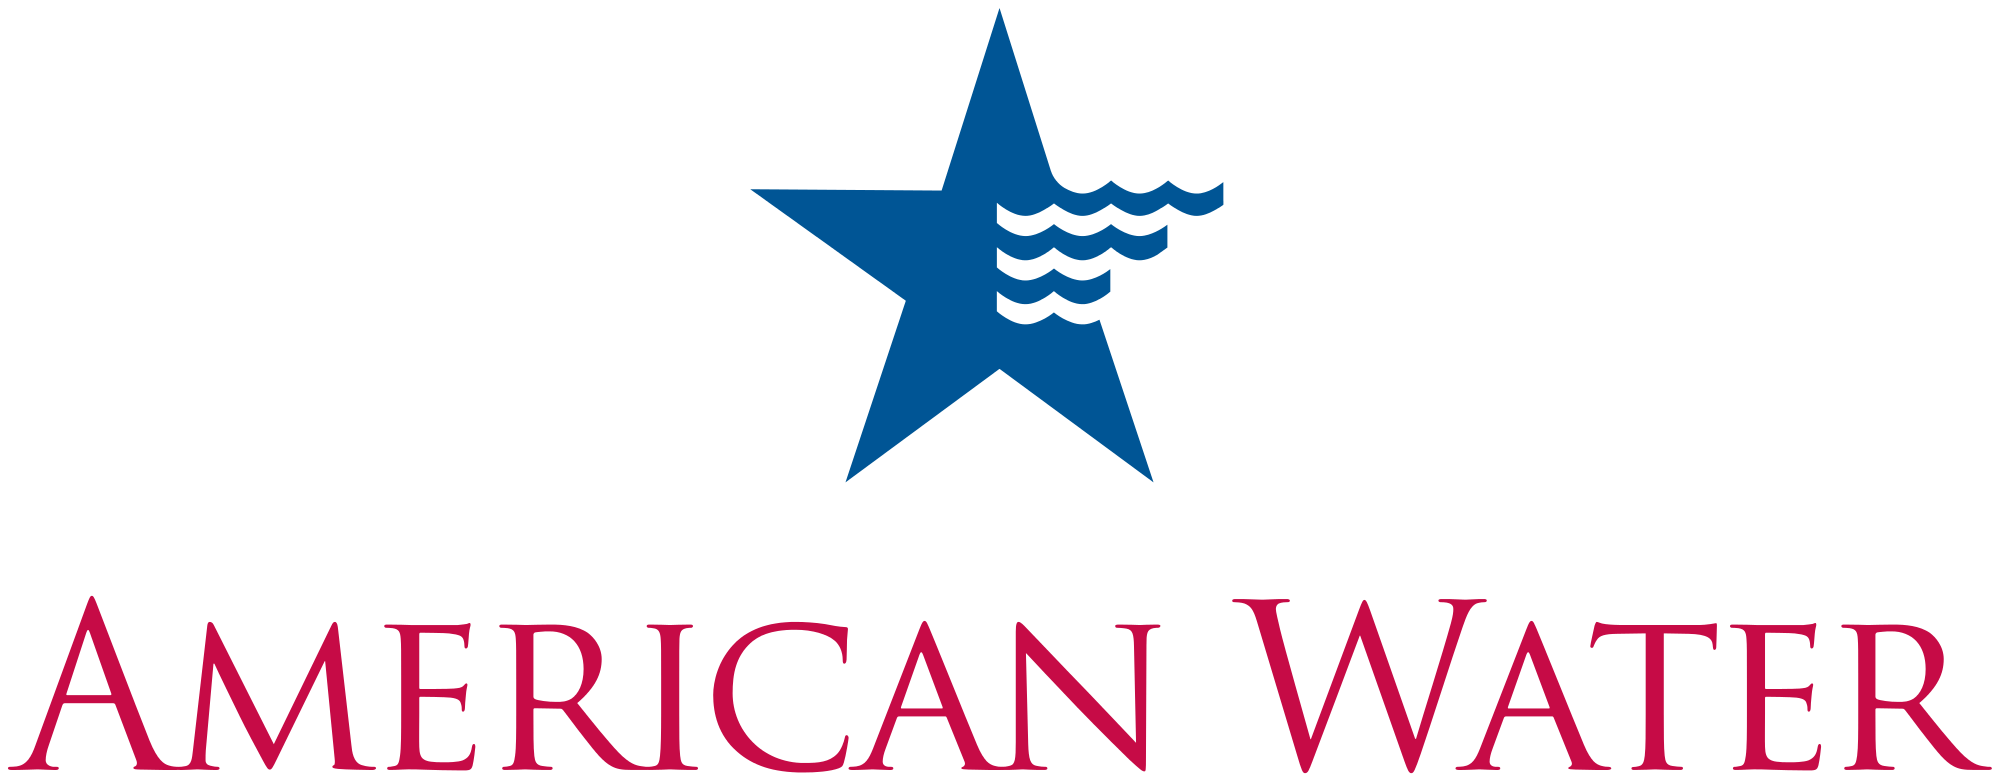 American IT Company Logo - American Water Works Company Logo.svg